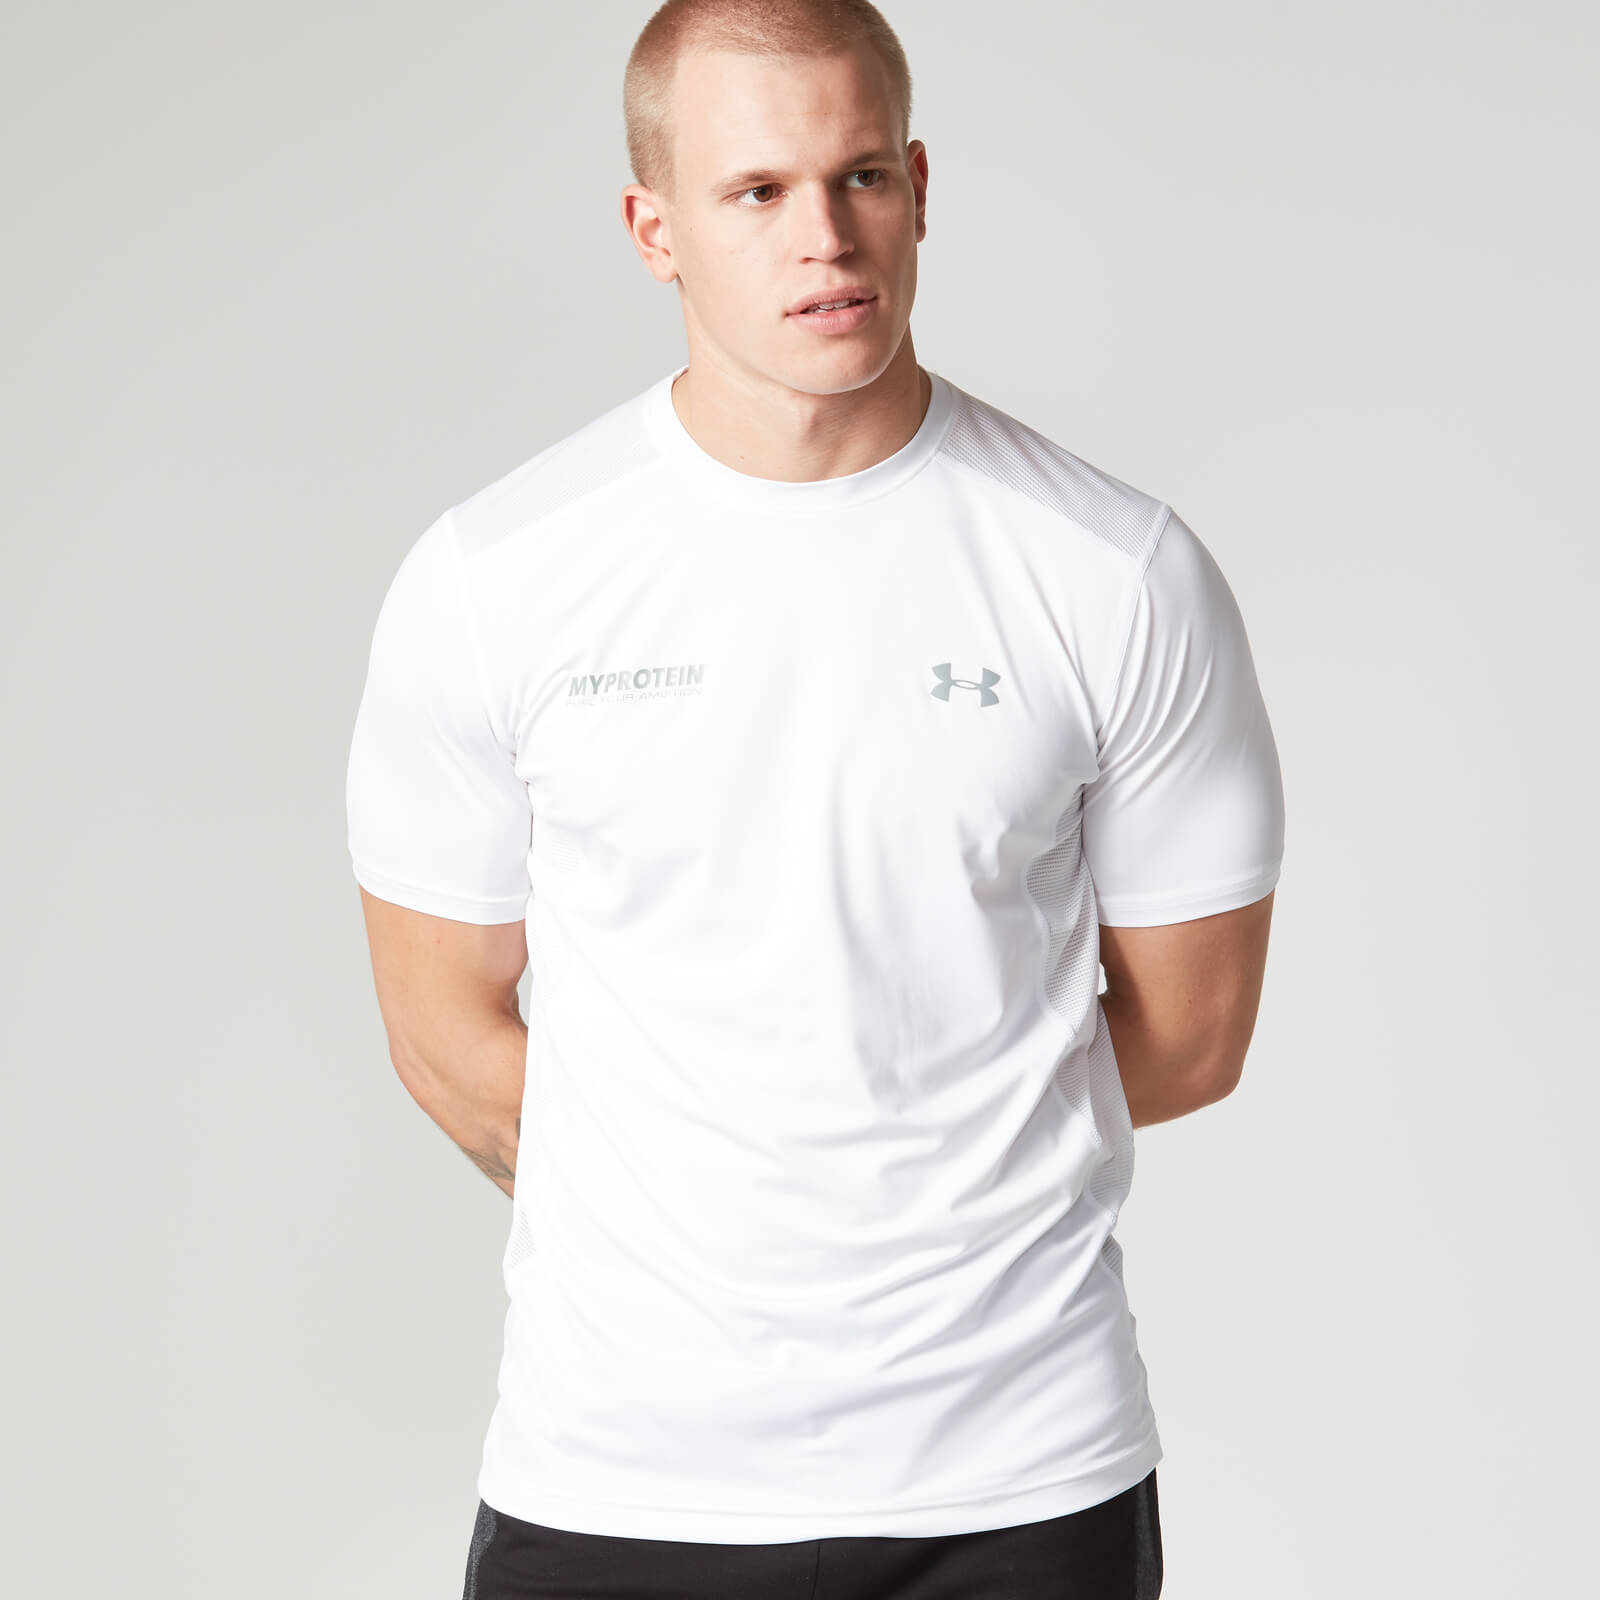 Buy Men's Under Armour Tech T-Shirt, White/Black